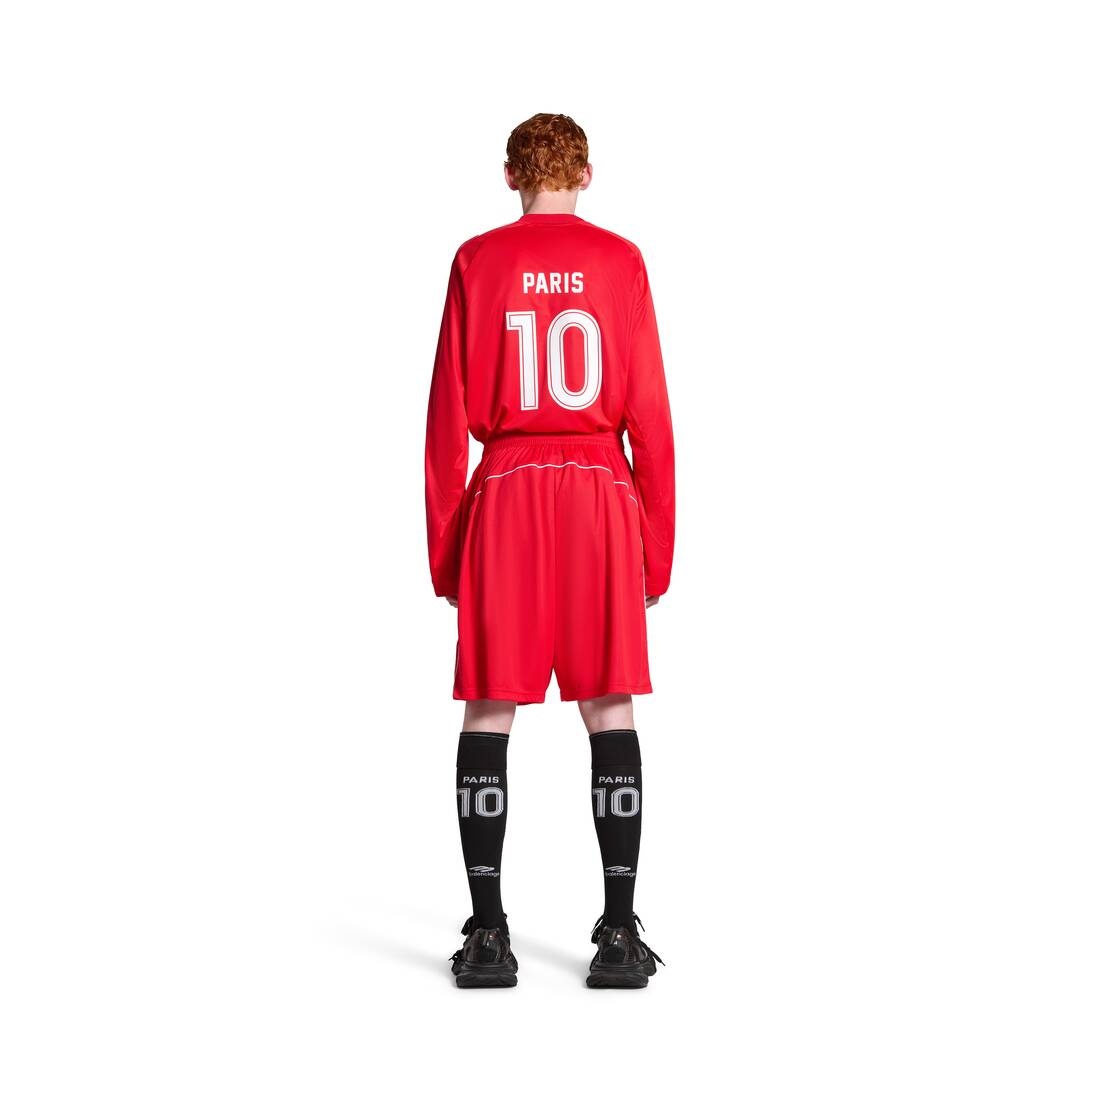 Men's Soccer Baggy Shorts in Red/white - 4